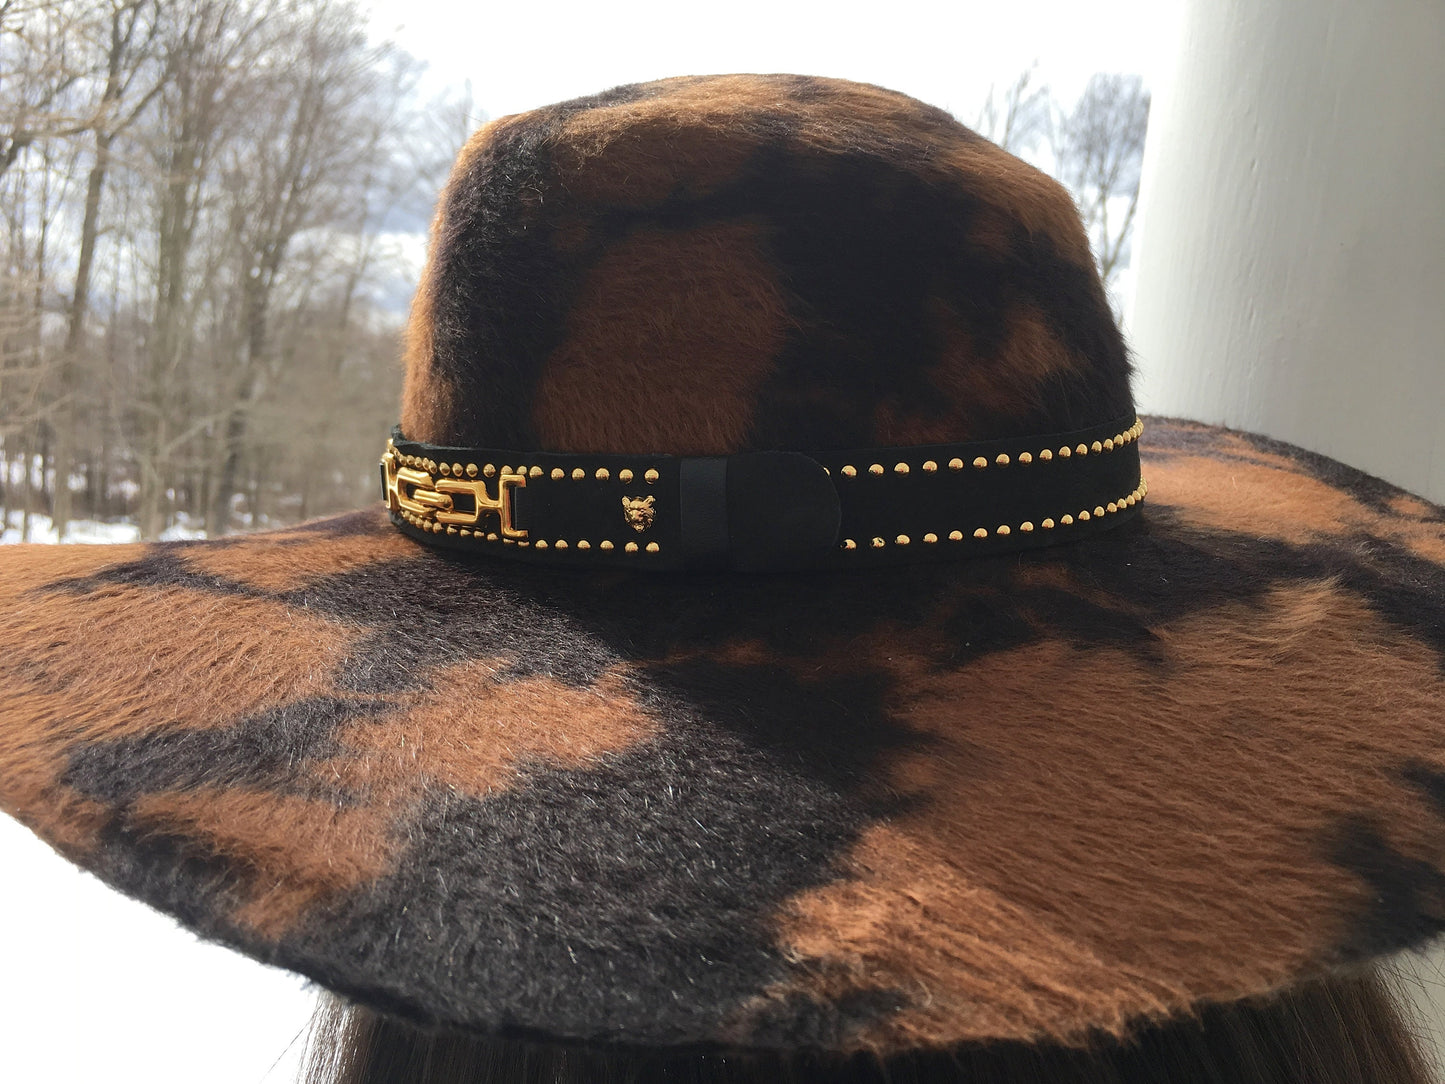 Long Hair Fur Felt Wool Animal Print Western Hat-Brown and Black-Goldtone Buckle trim on Black Suede Hat Band-Casual Chic Hat-Everywhere Hat